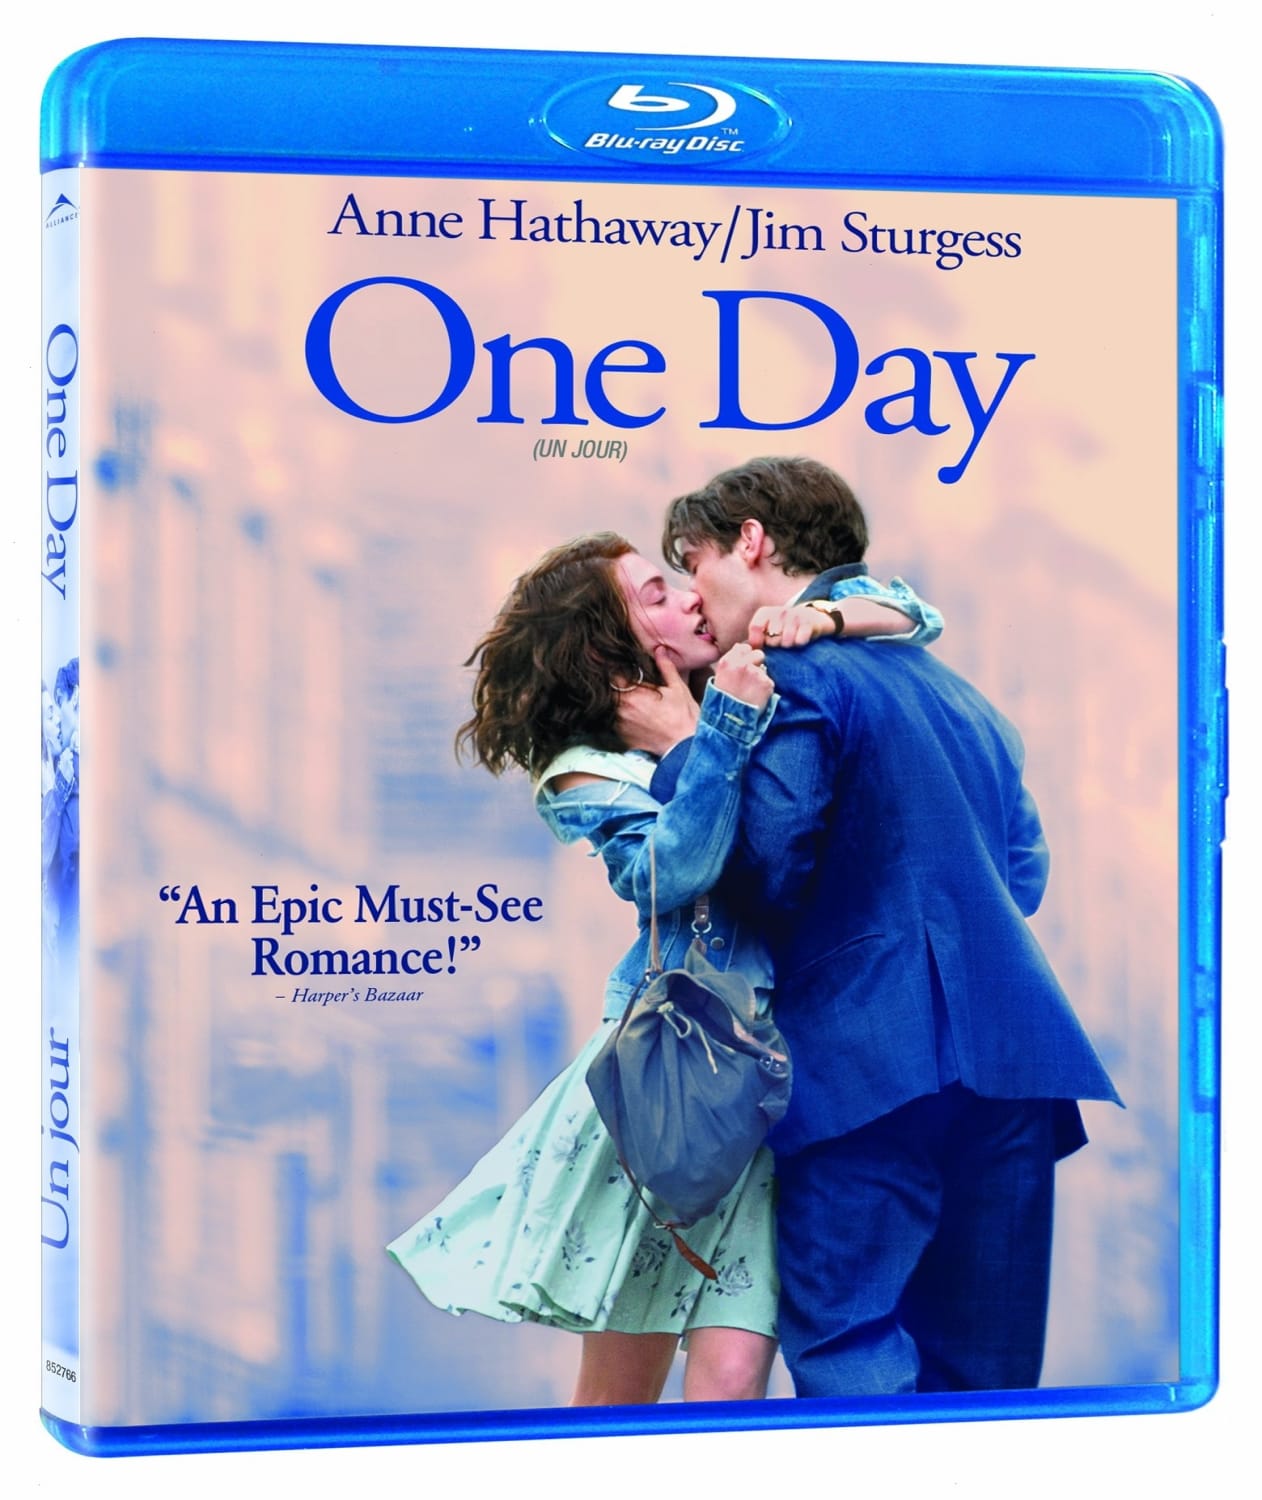 One Day (Blu-ray) on MovieShack